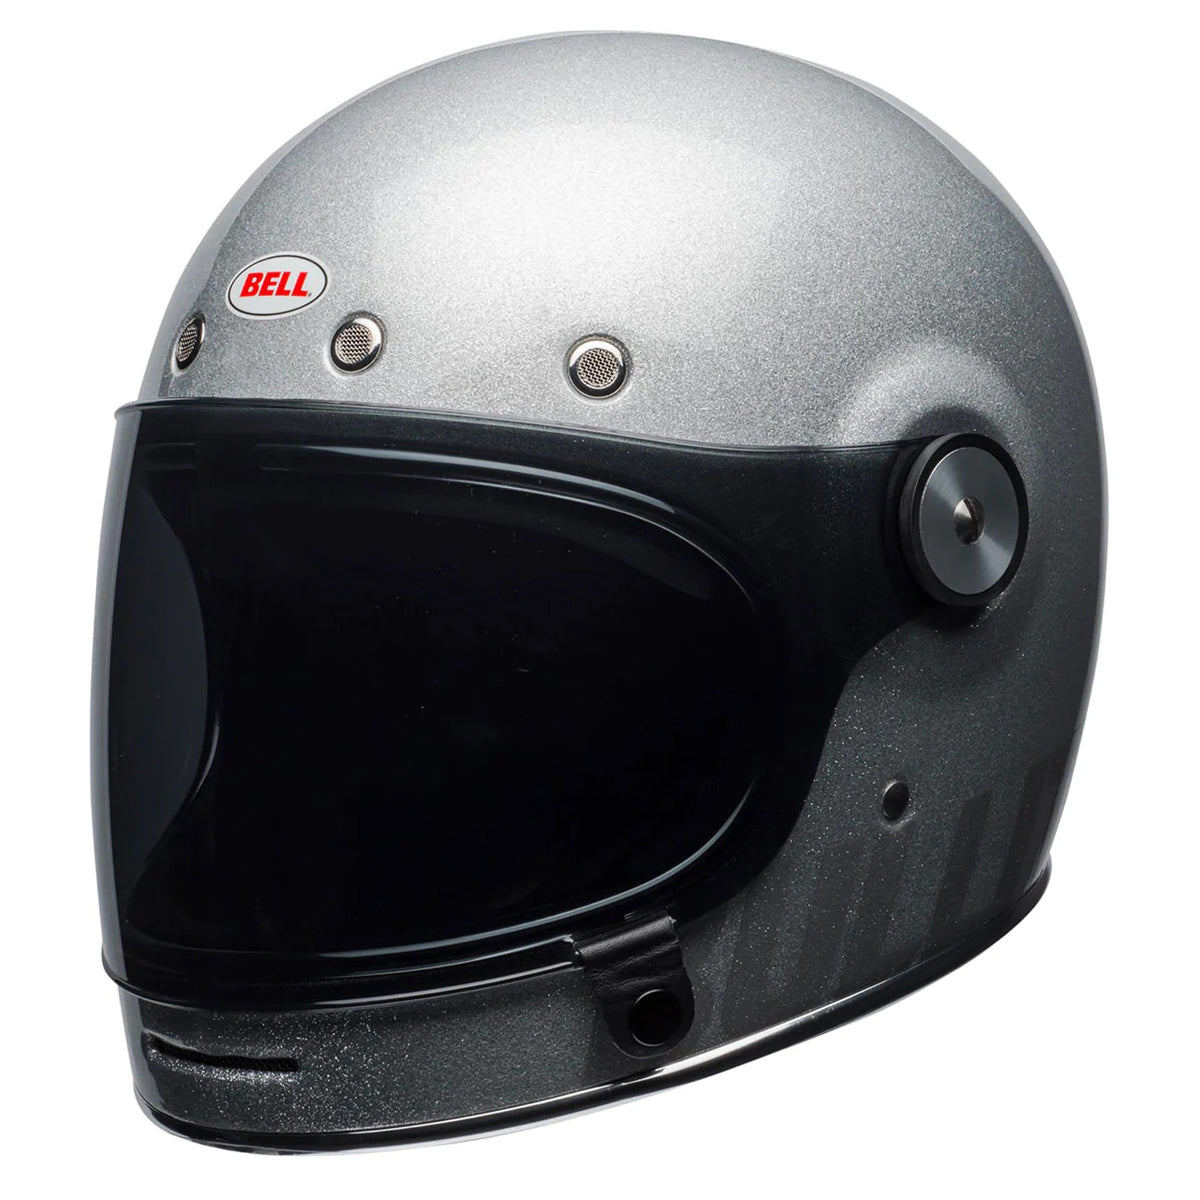 Bell Bullit Flake Adult Street Helmets